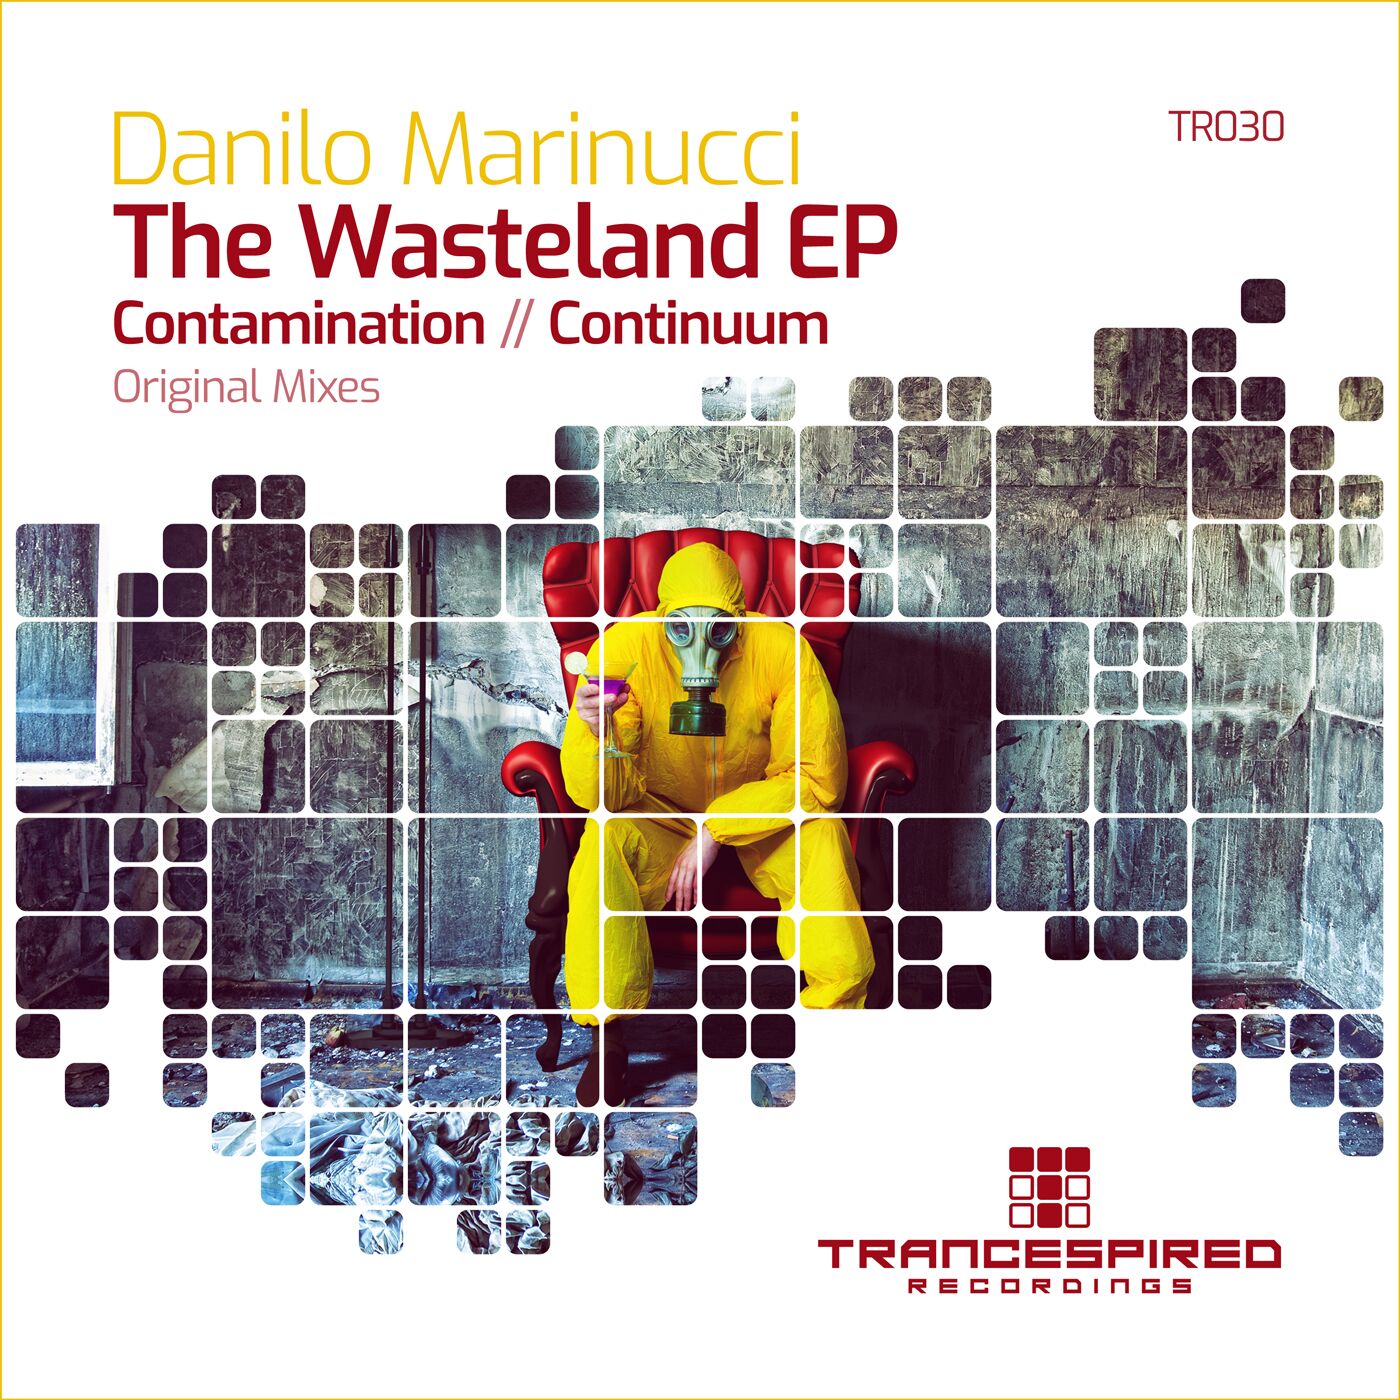 Danilo Marinucci presents The Wasteland EP on Trancespired Recordings